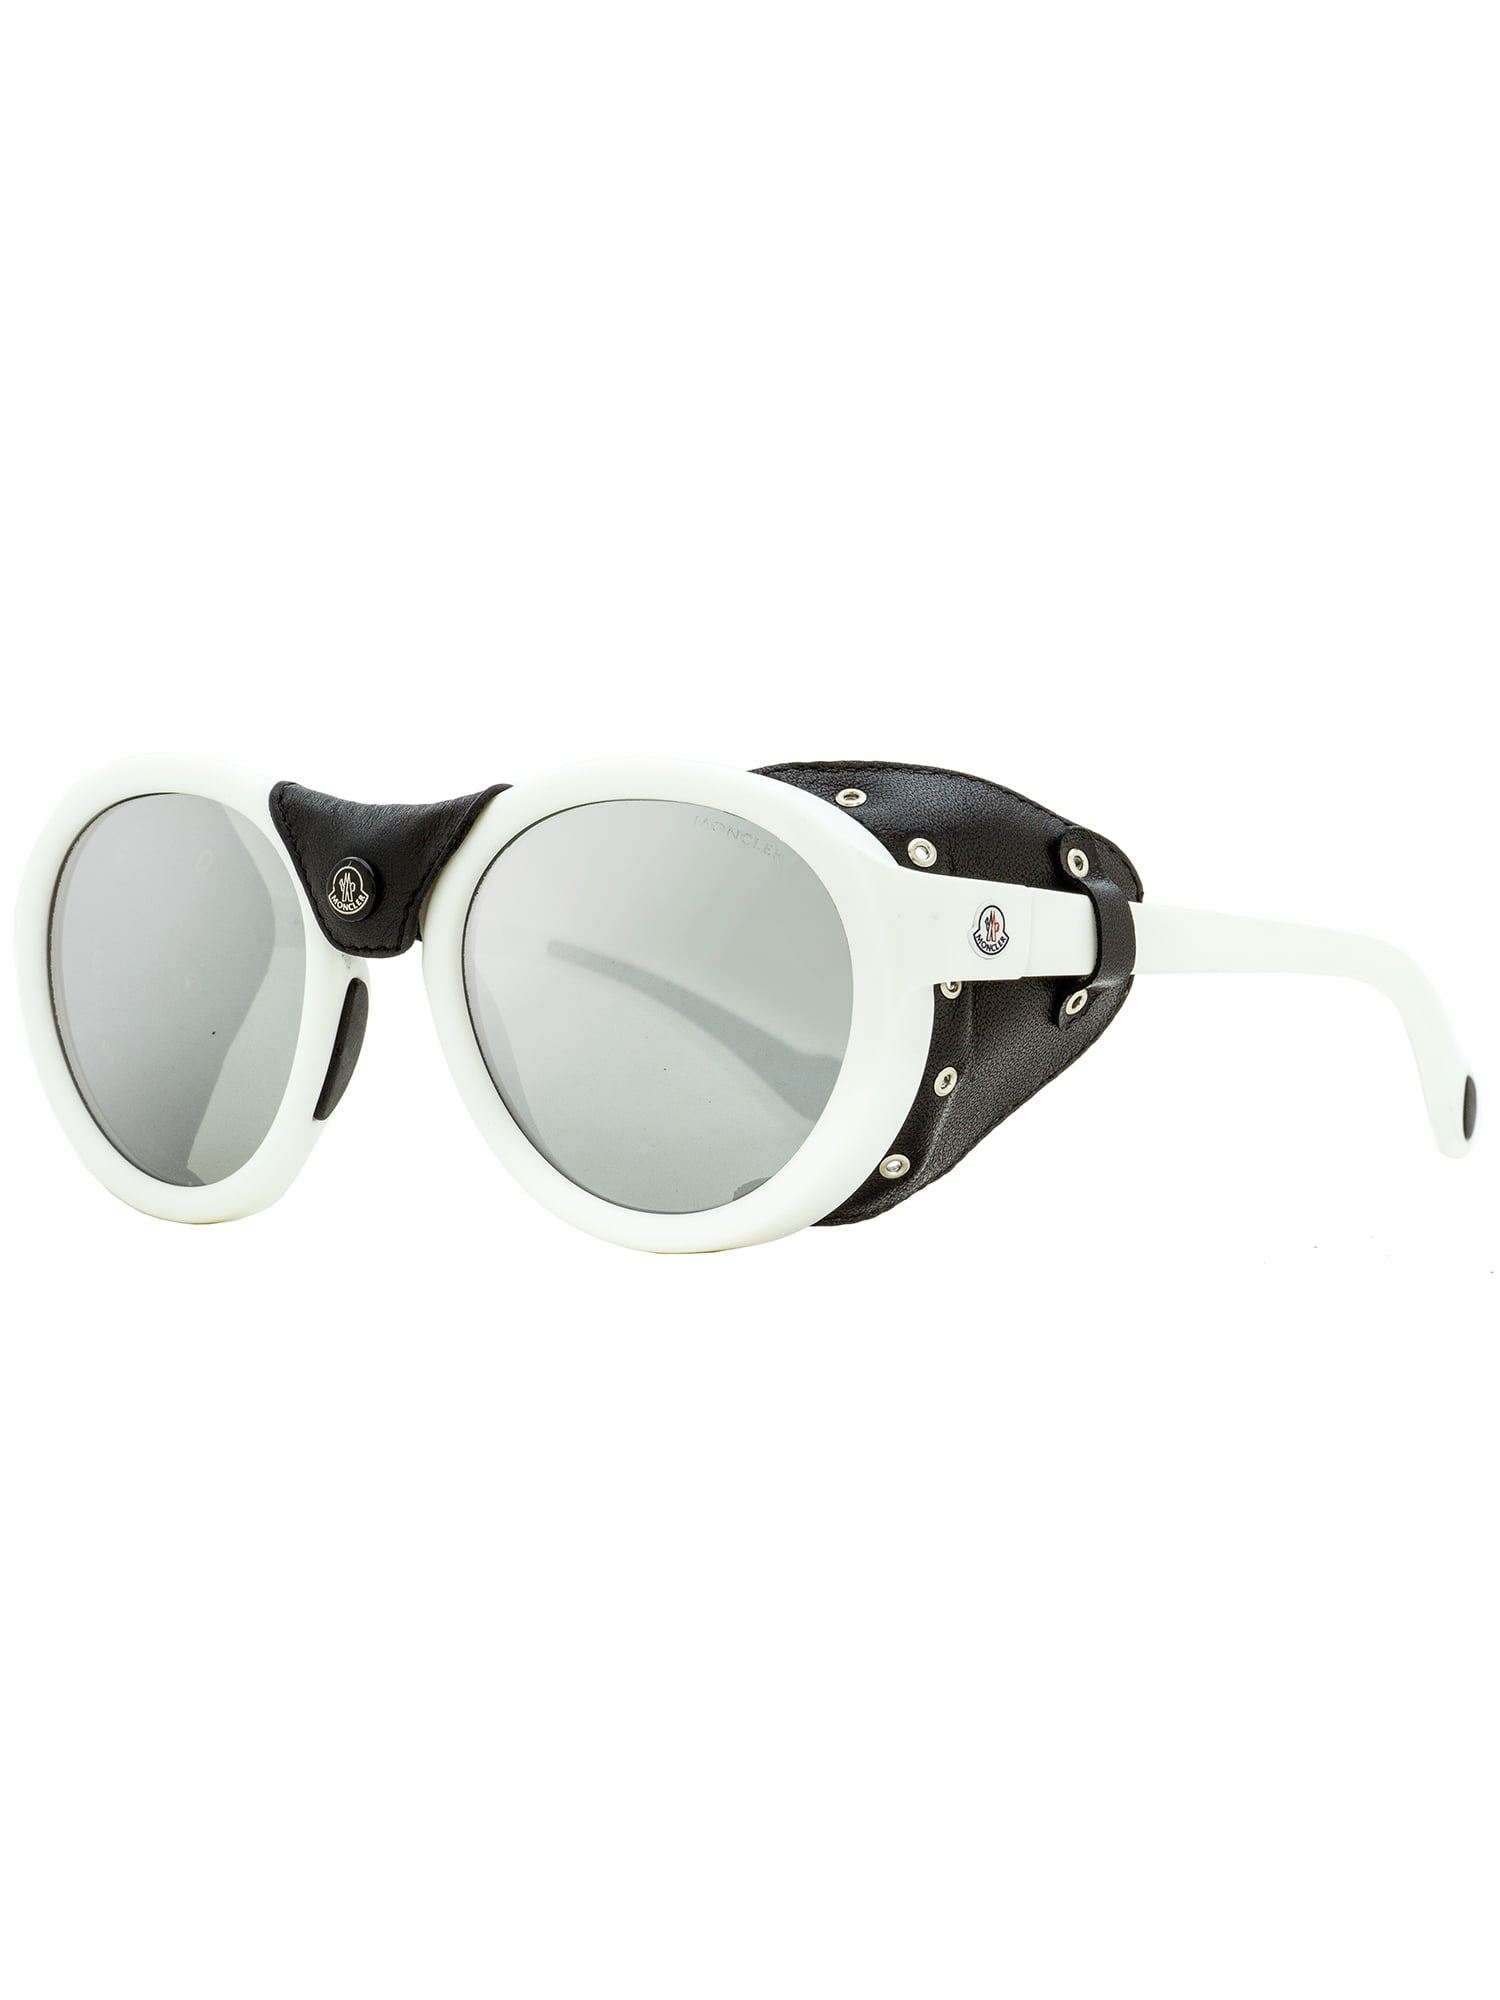 Designer Celebrity Cat Style Large Womens Sunglasses Vintage Shape DG 1137 